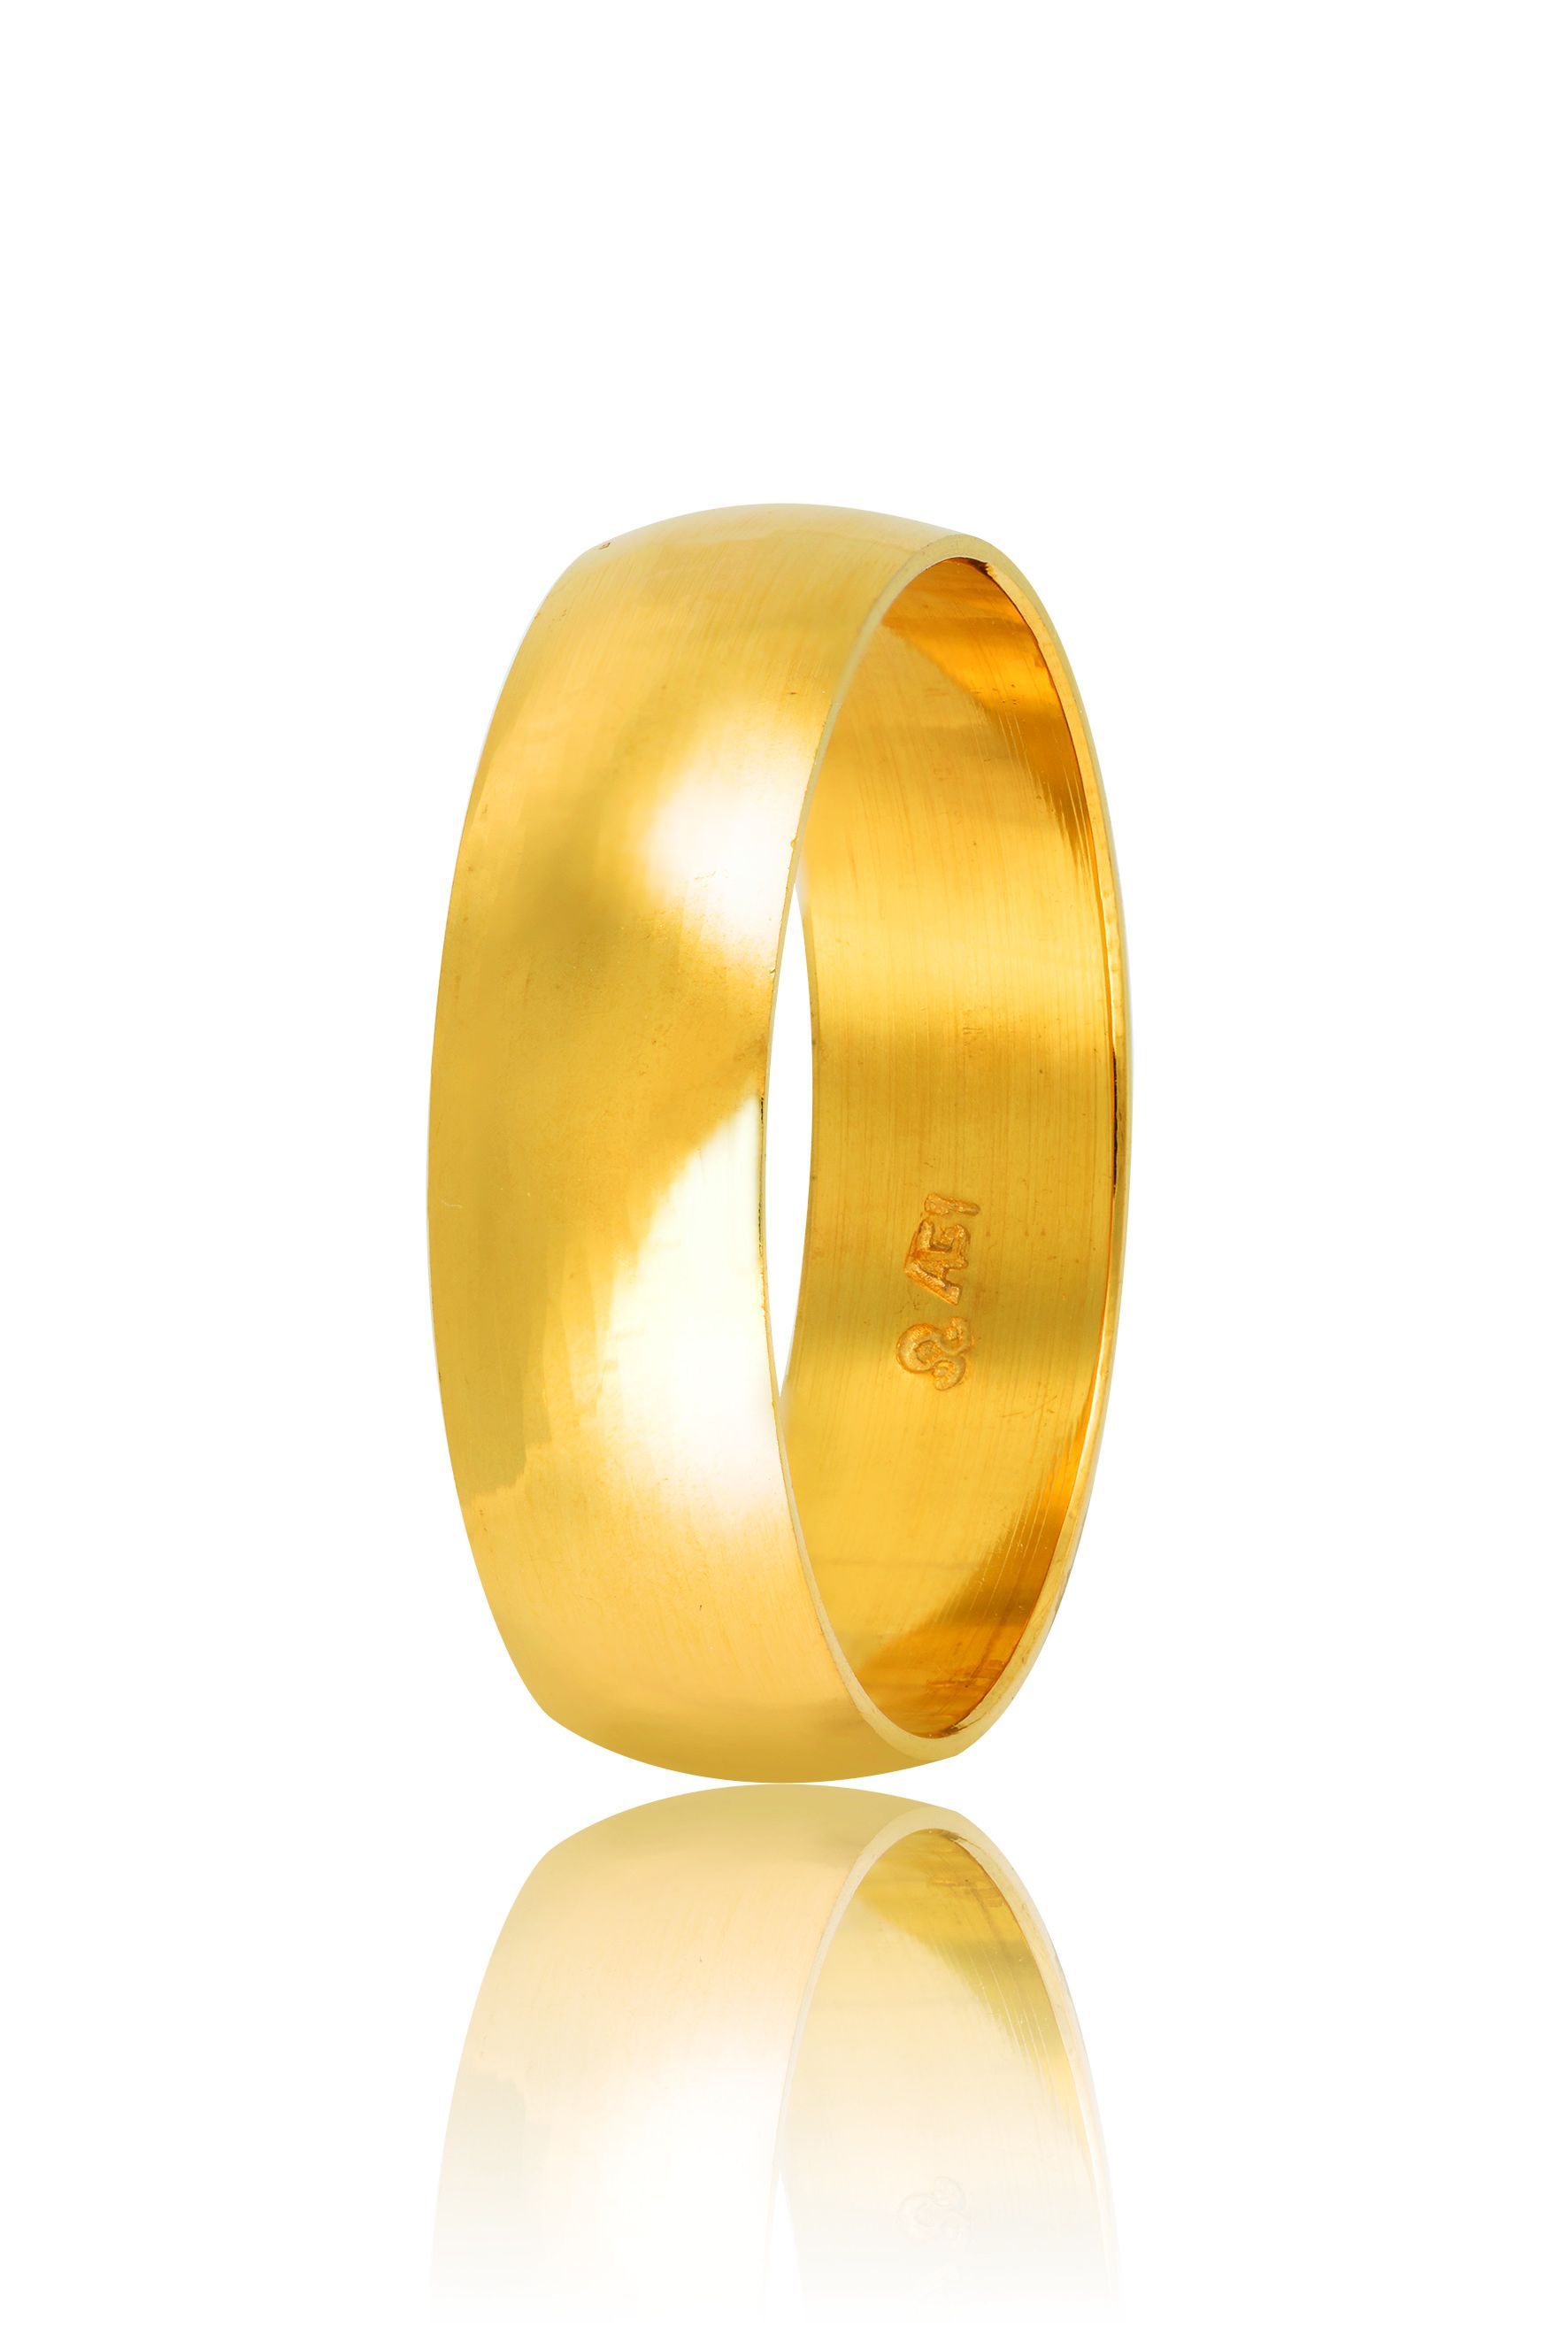 Golden wedding rings 6mm (code HR4Ay)